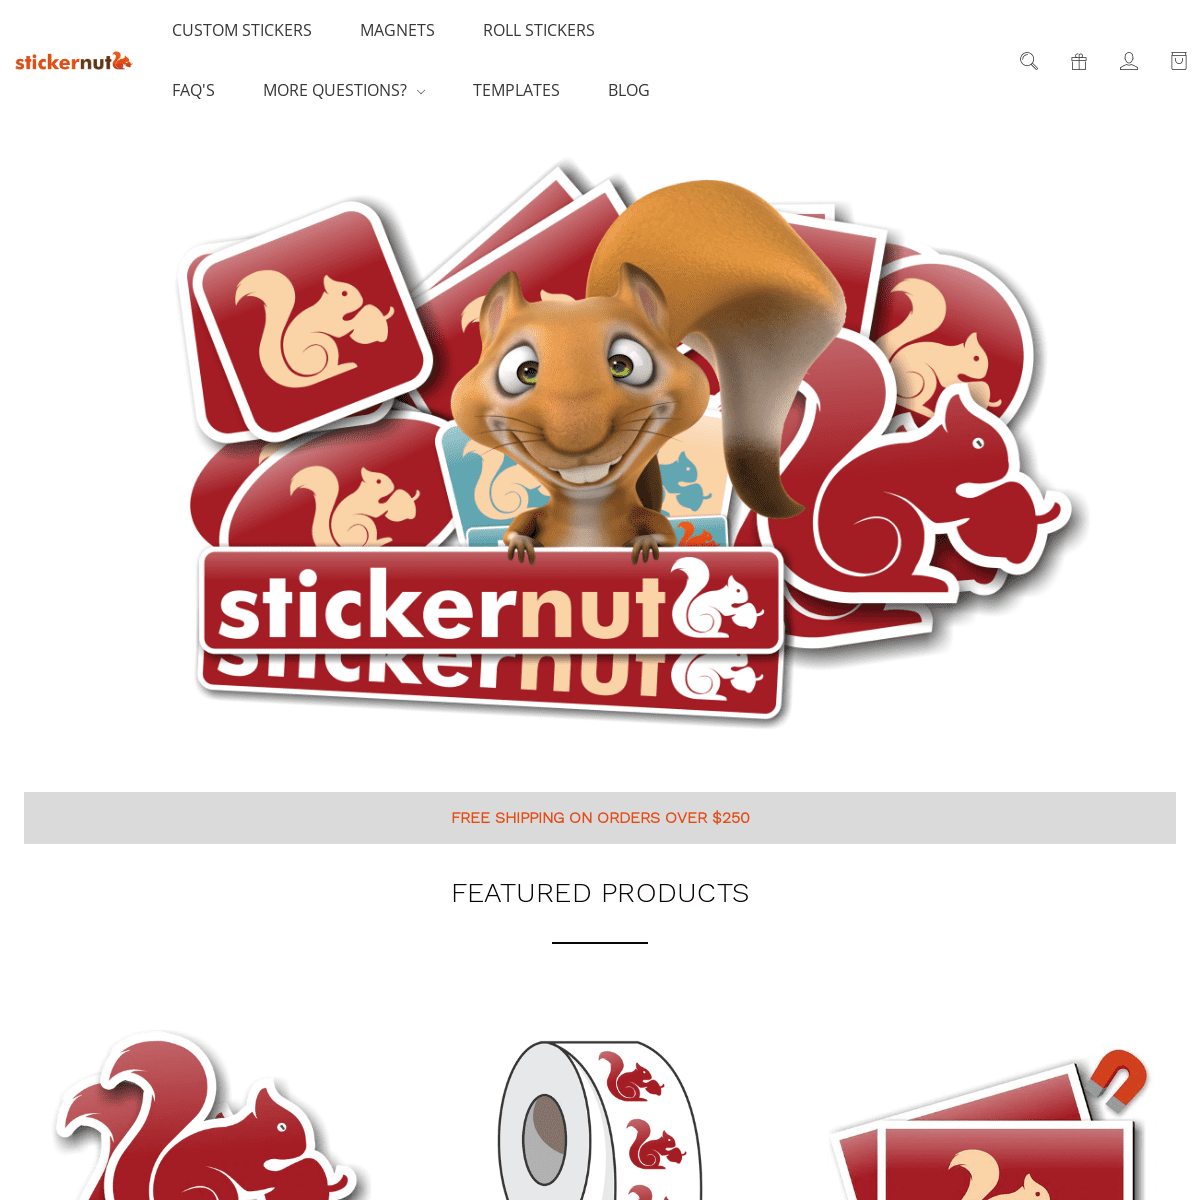 Sticker Nut - Custom Stickers - Die Cut Stickers - Decals - roll stickers - paper stickers - magnets